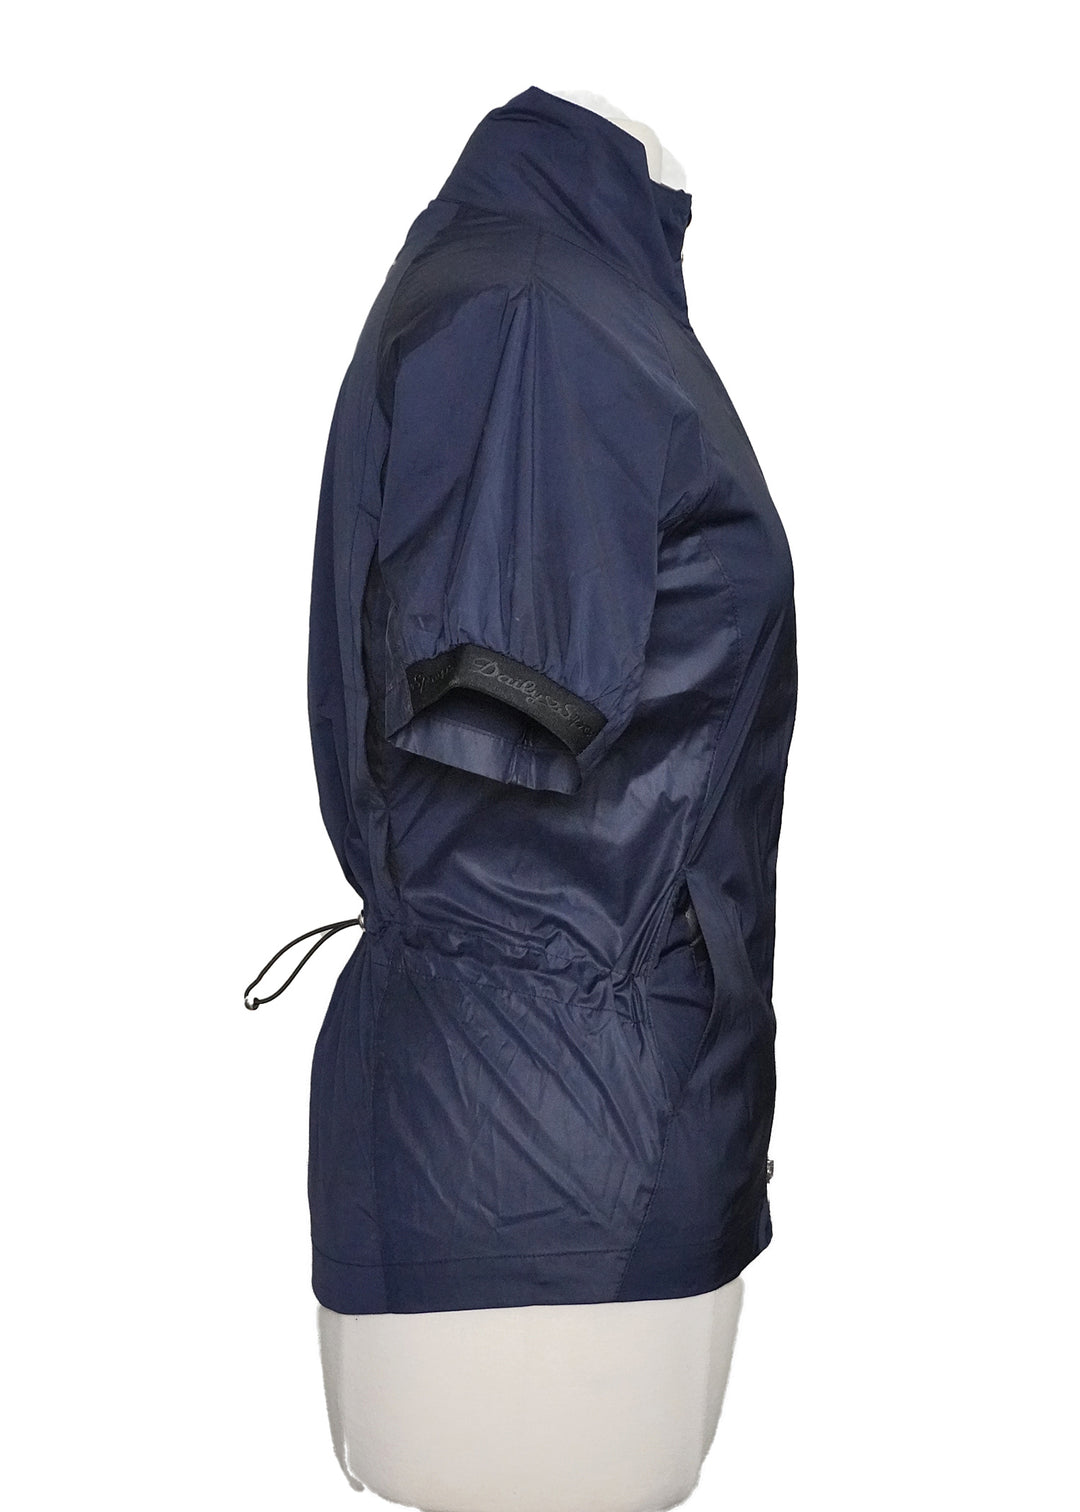 Daily Sports Short Sleeve Wind Jacket - Navy - Size X-Small - Skorzie